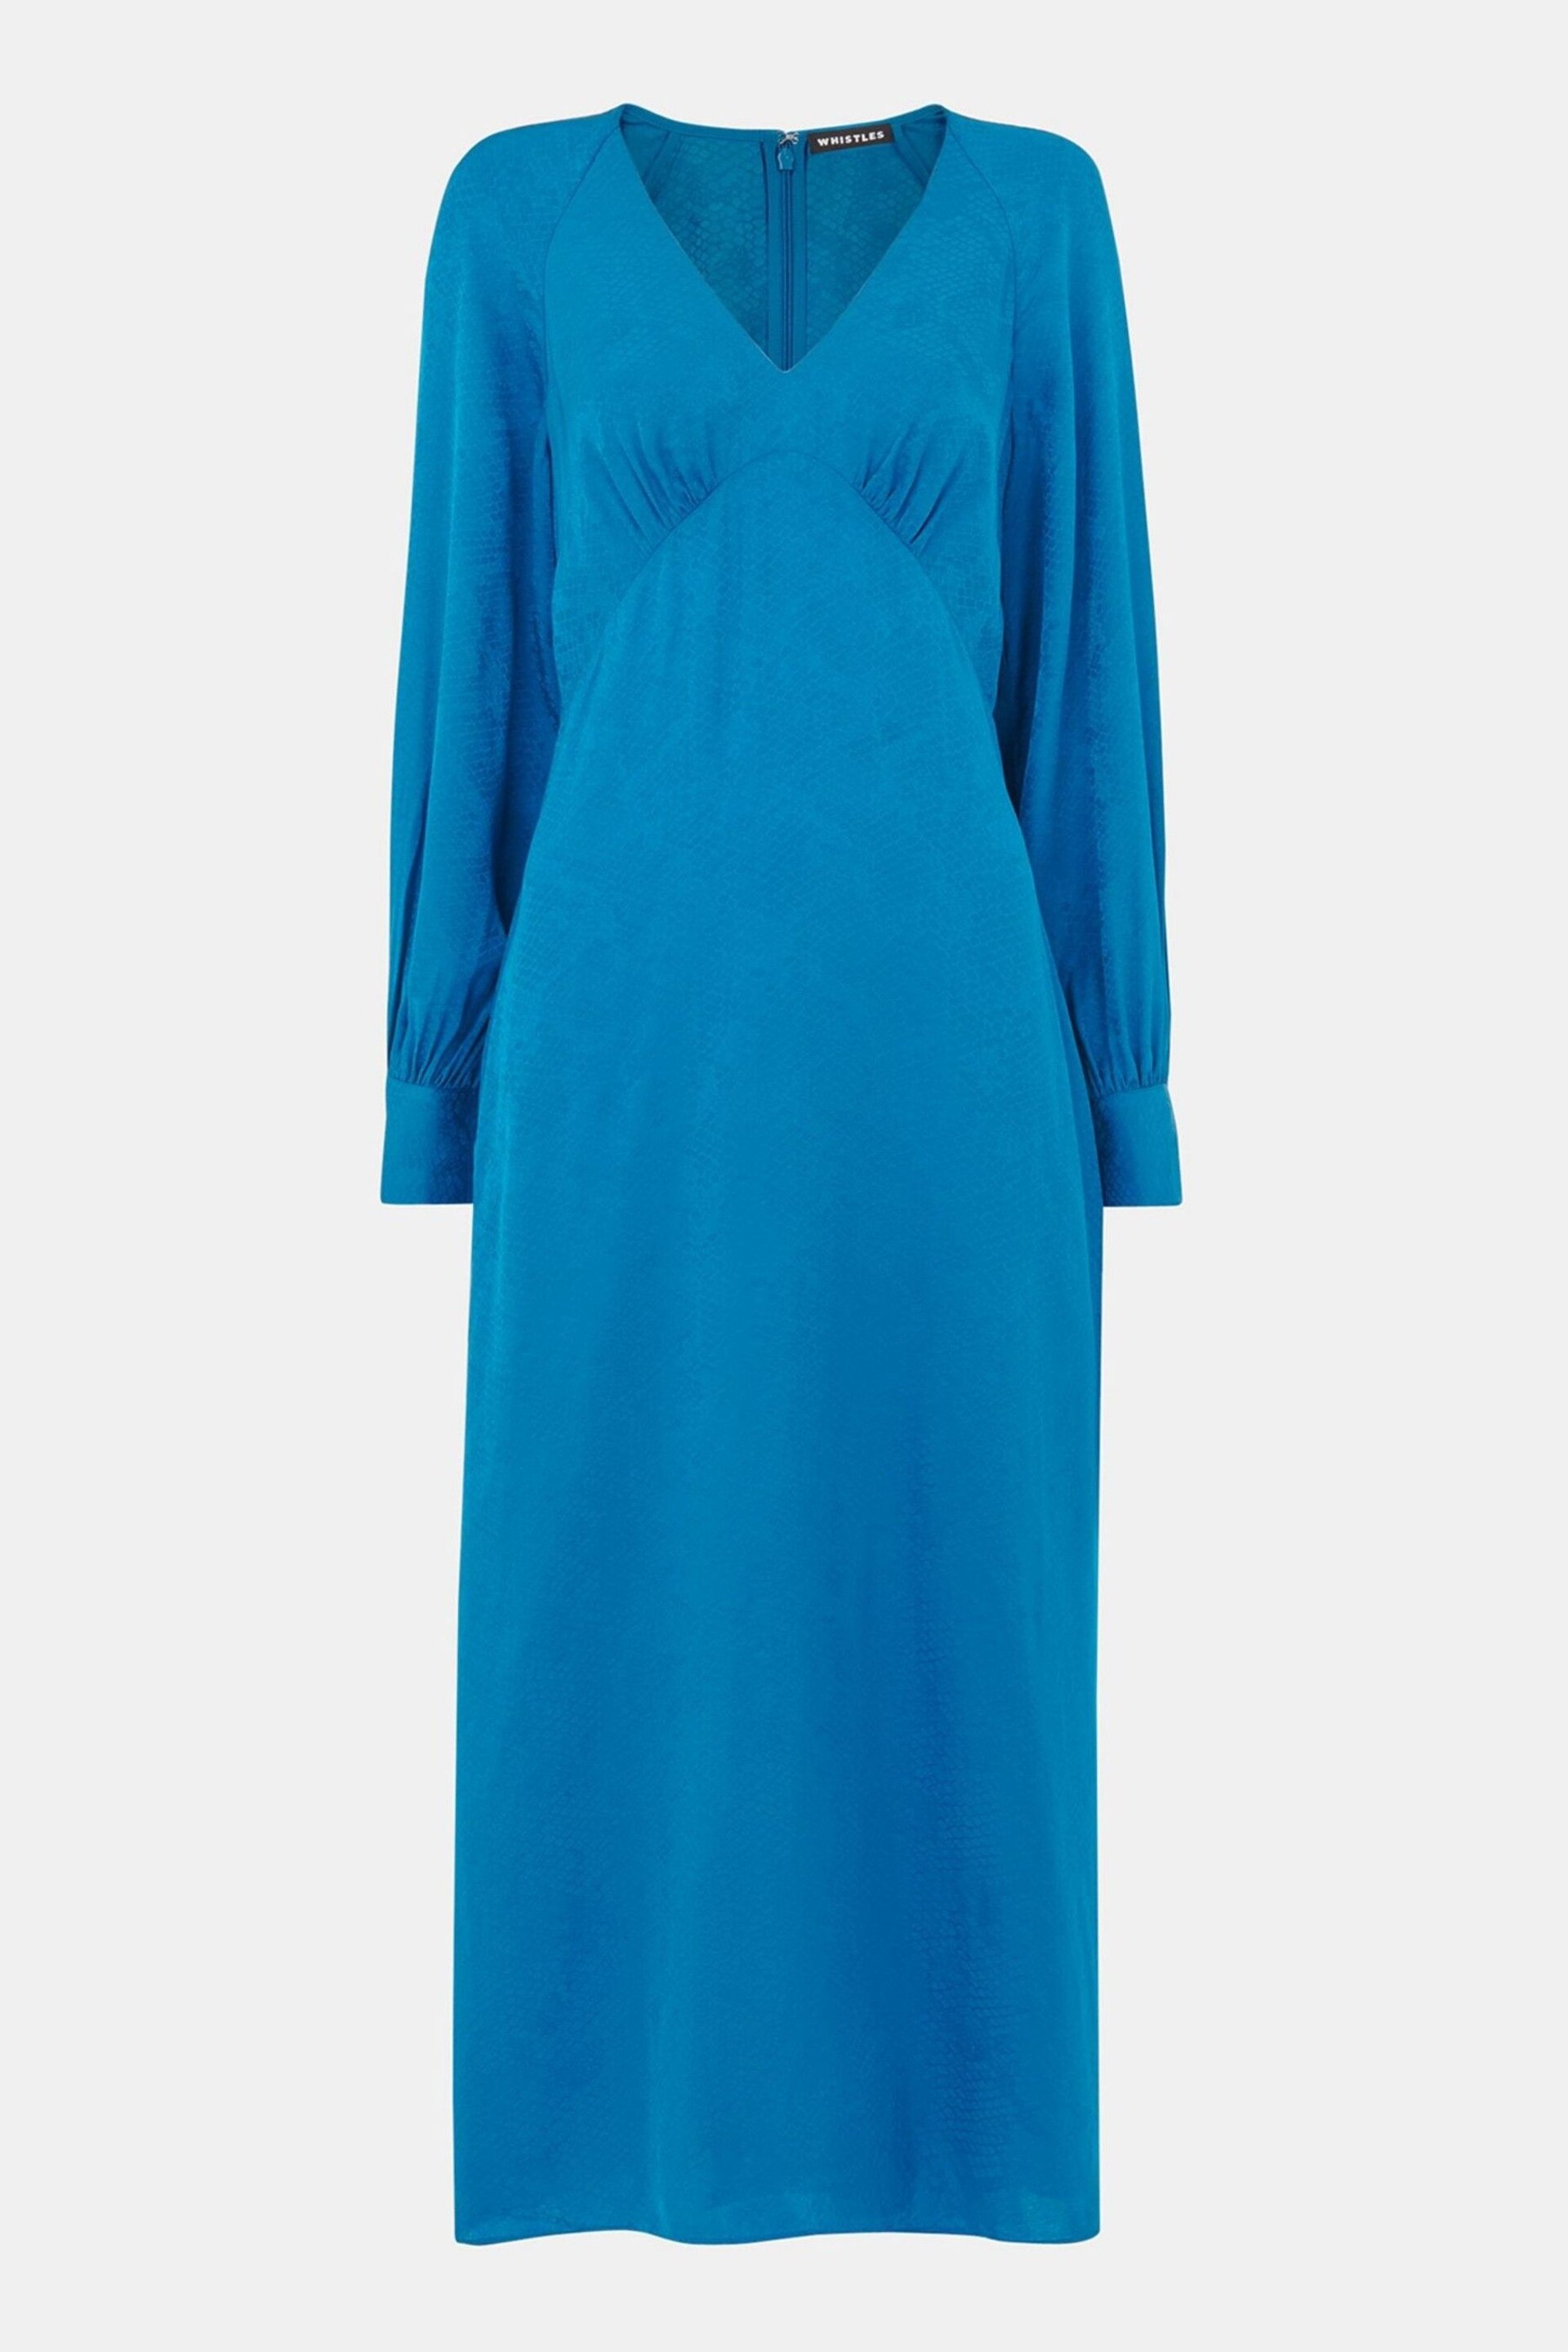 Whistles Blue Serpent Jacquard Midi Dress - Image 5 of 5